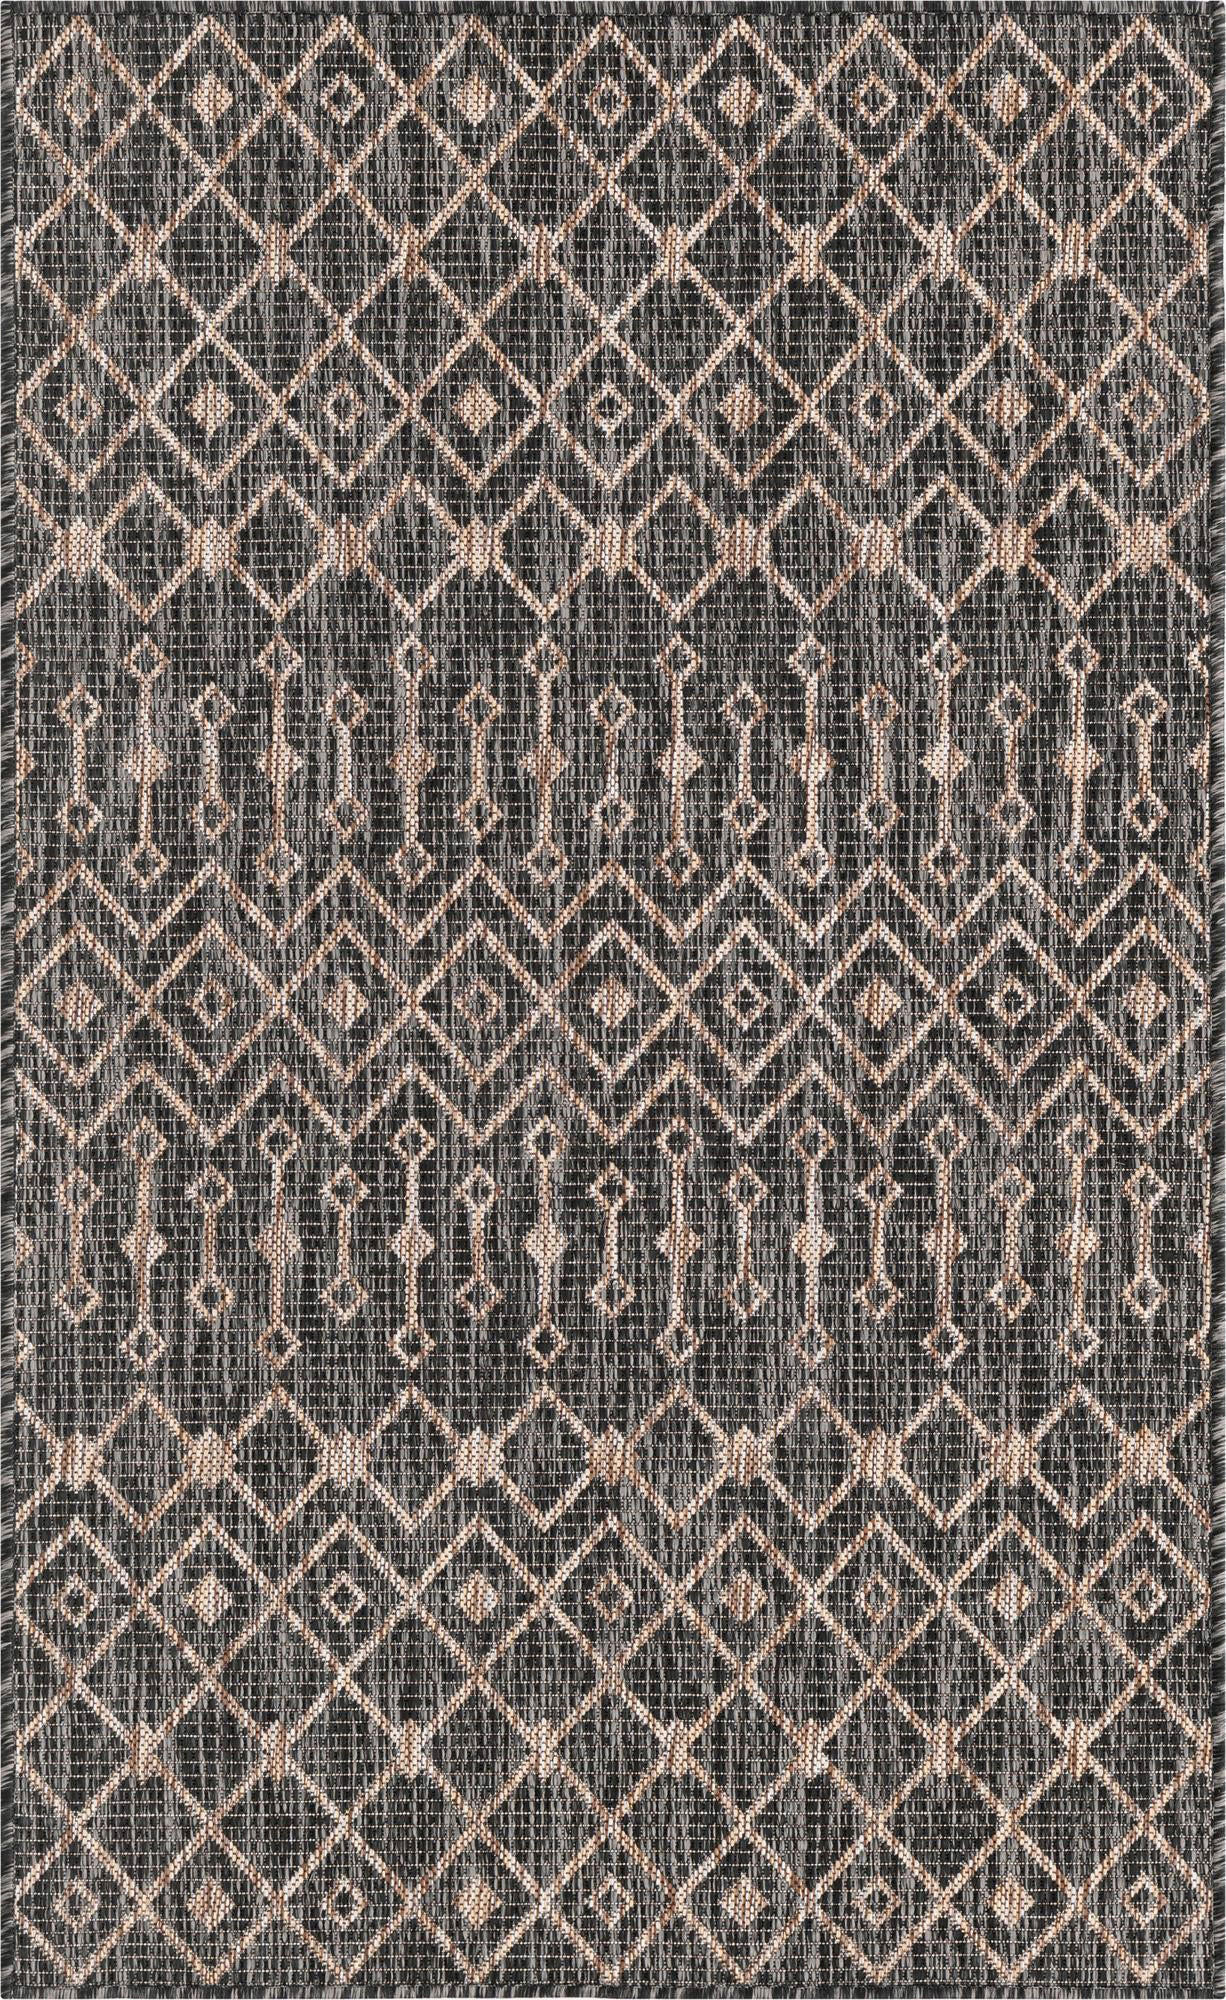 WEBTEPPICH  100/160 cm  Grau   - Grau, Basics, Textil (100/160cm)